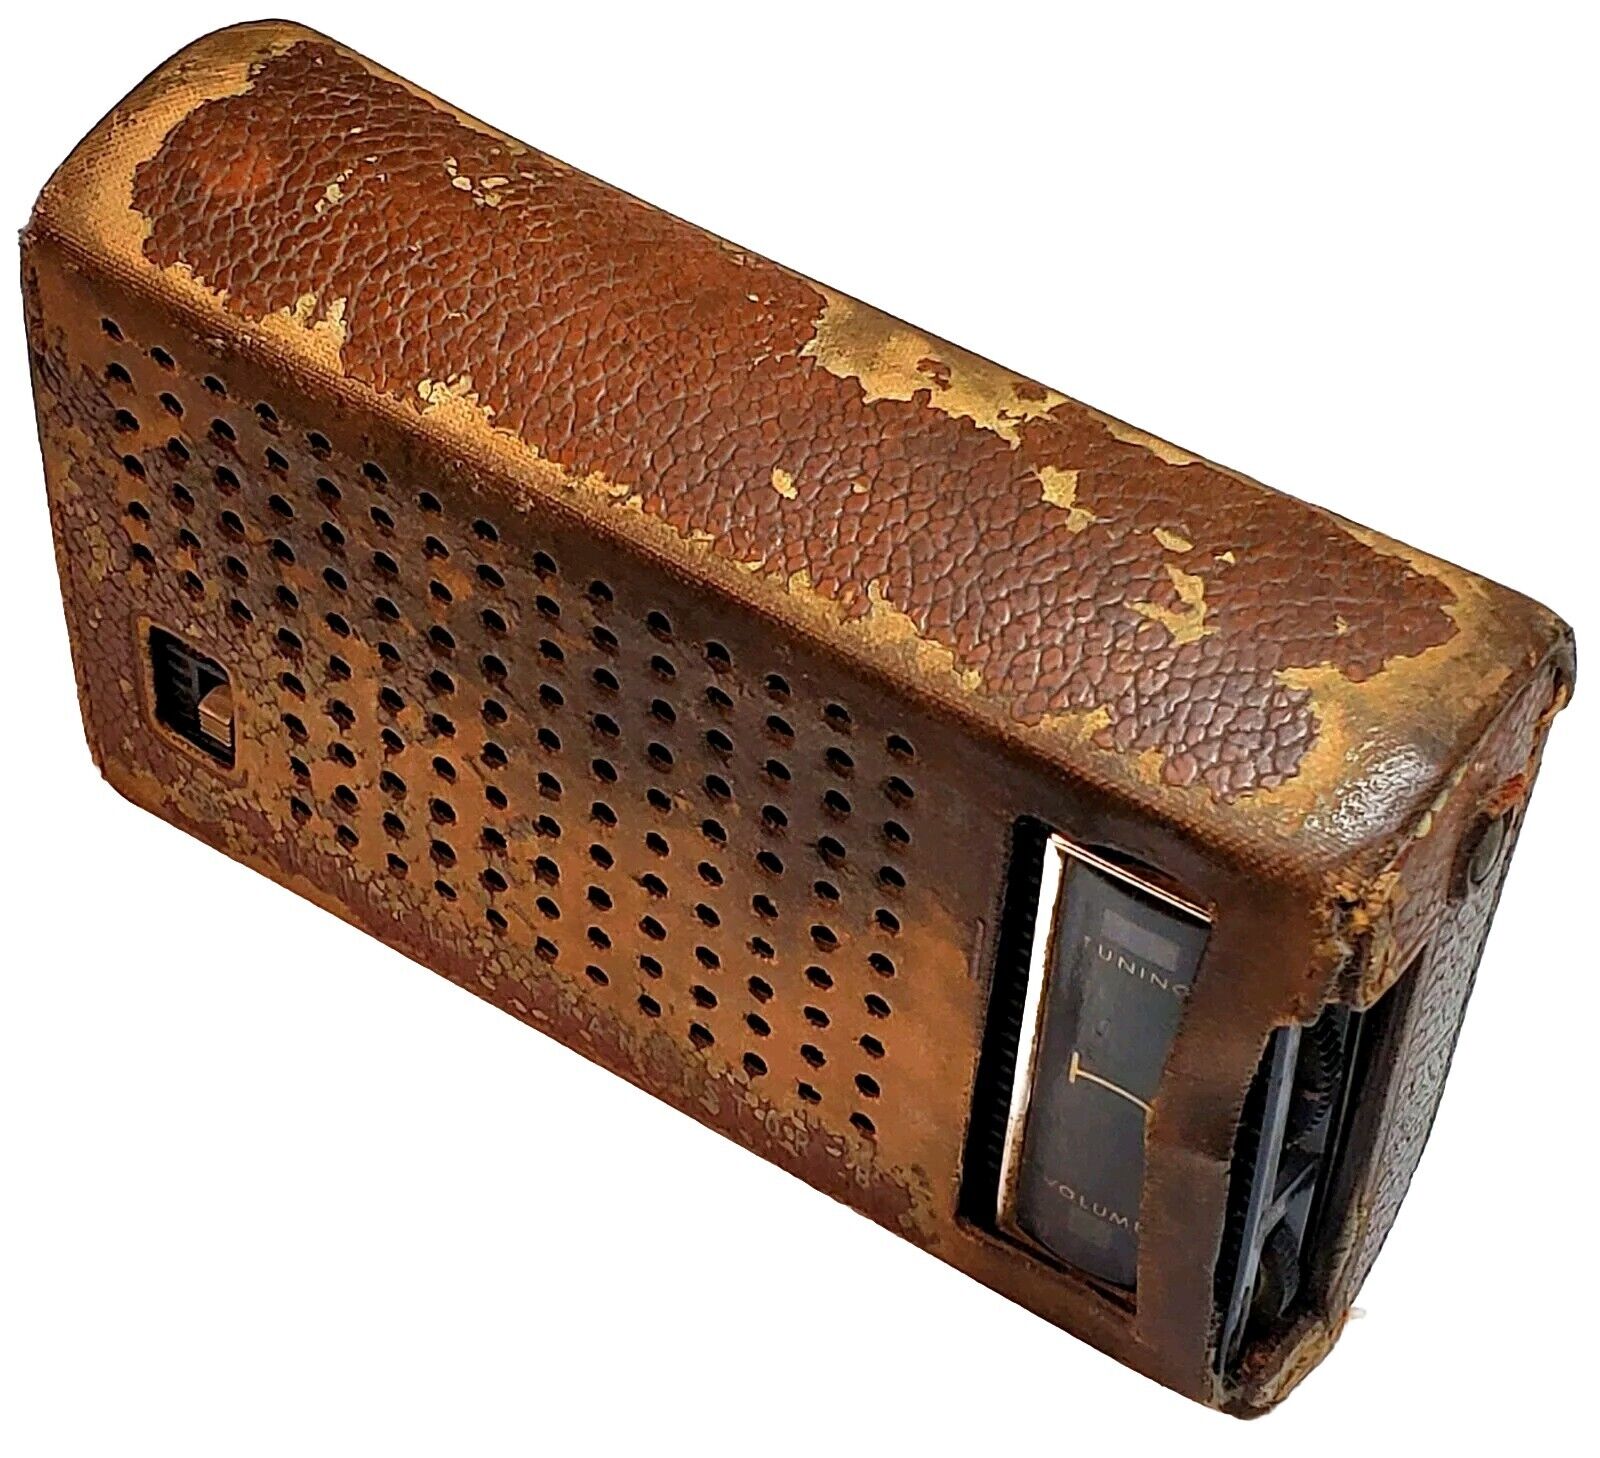 VTG Hitachi 8 Transistor Radio TH-848 & Brown Leather Case Japan Tested Working